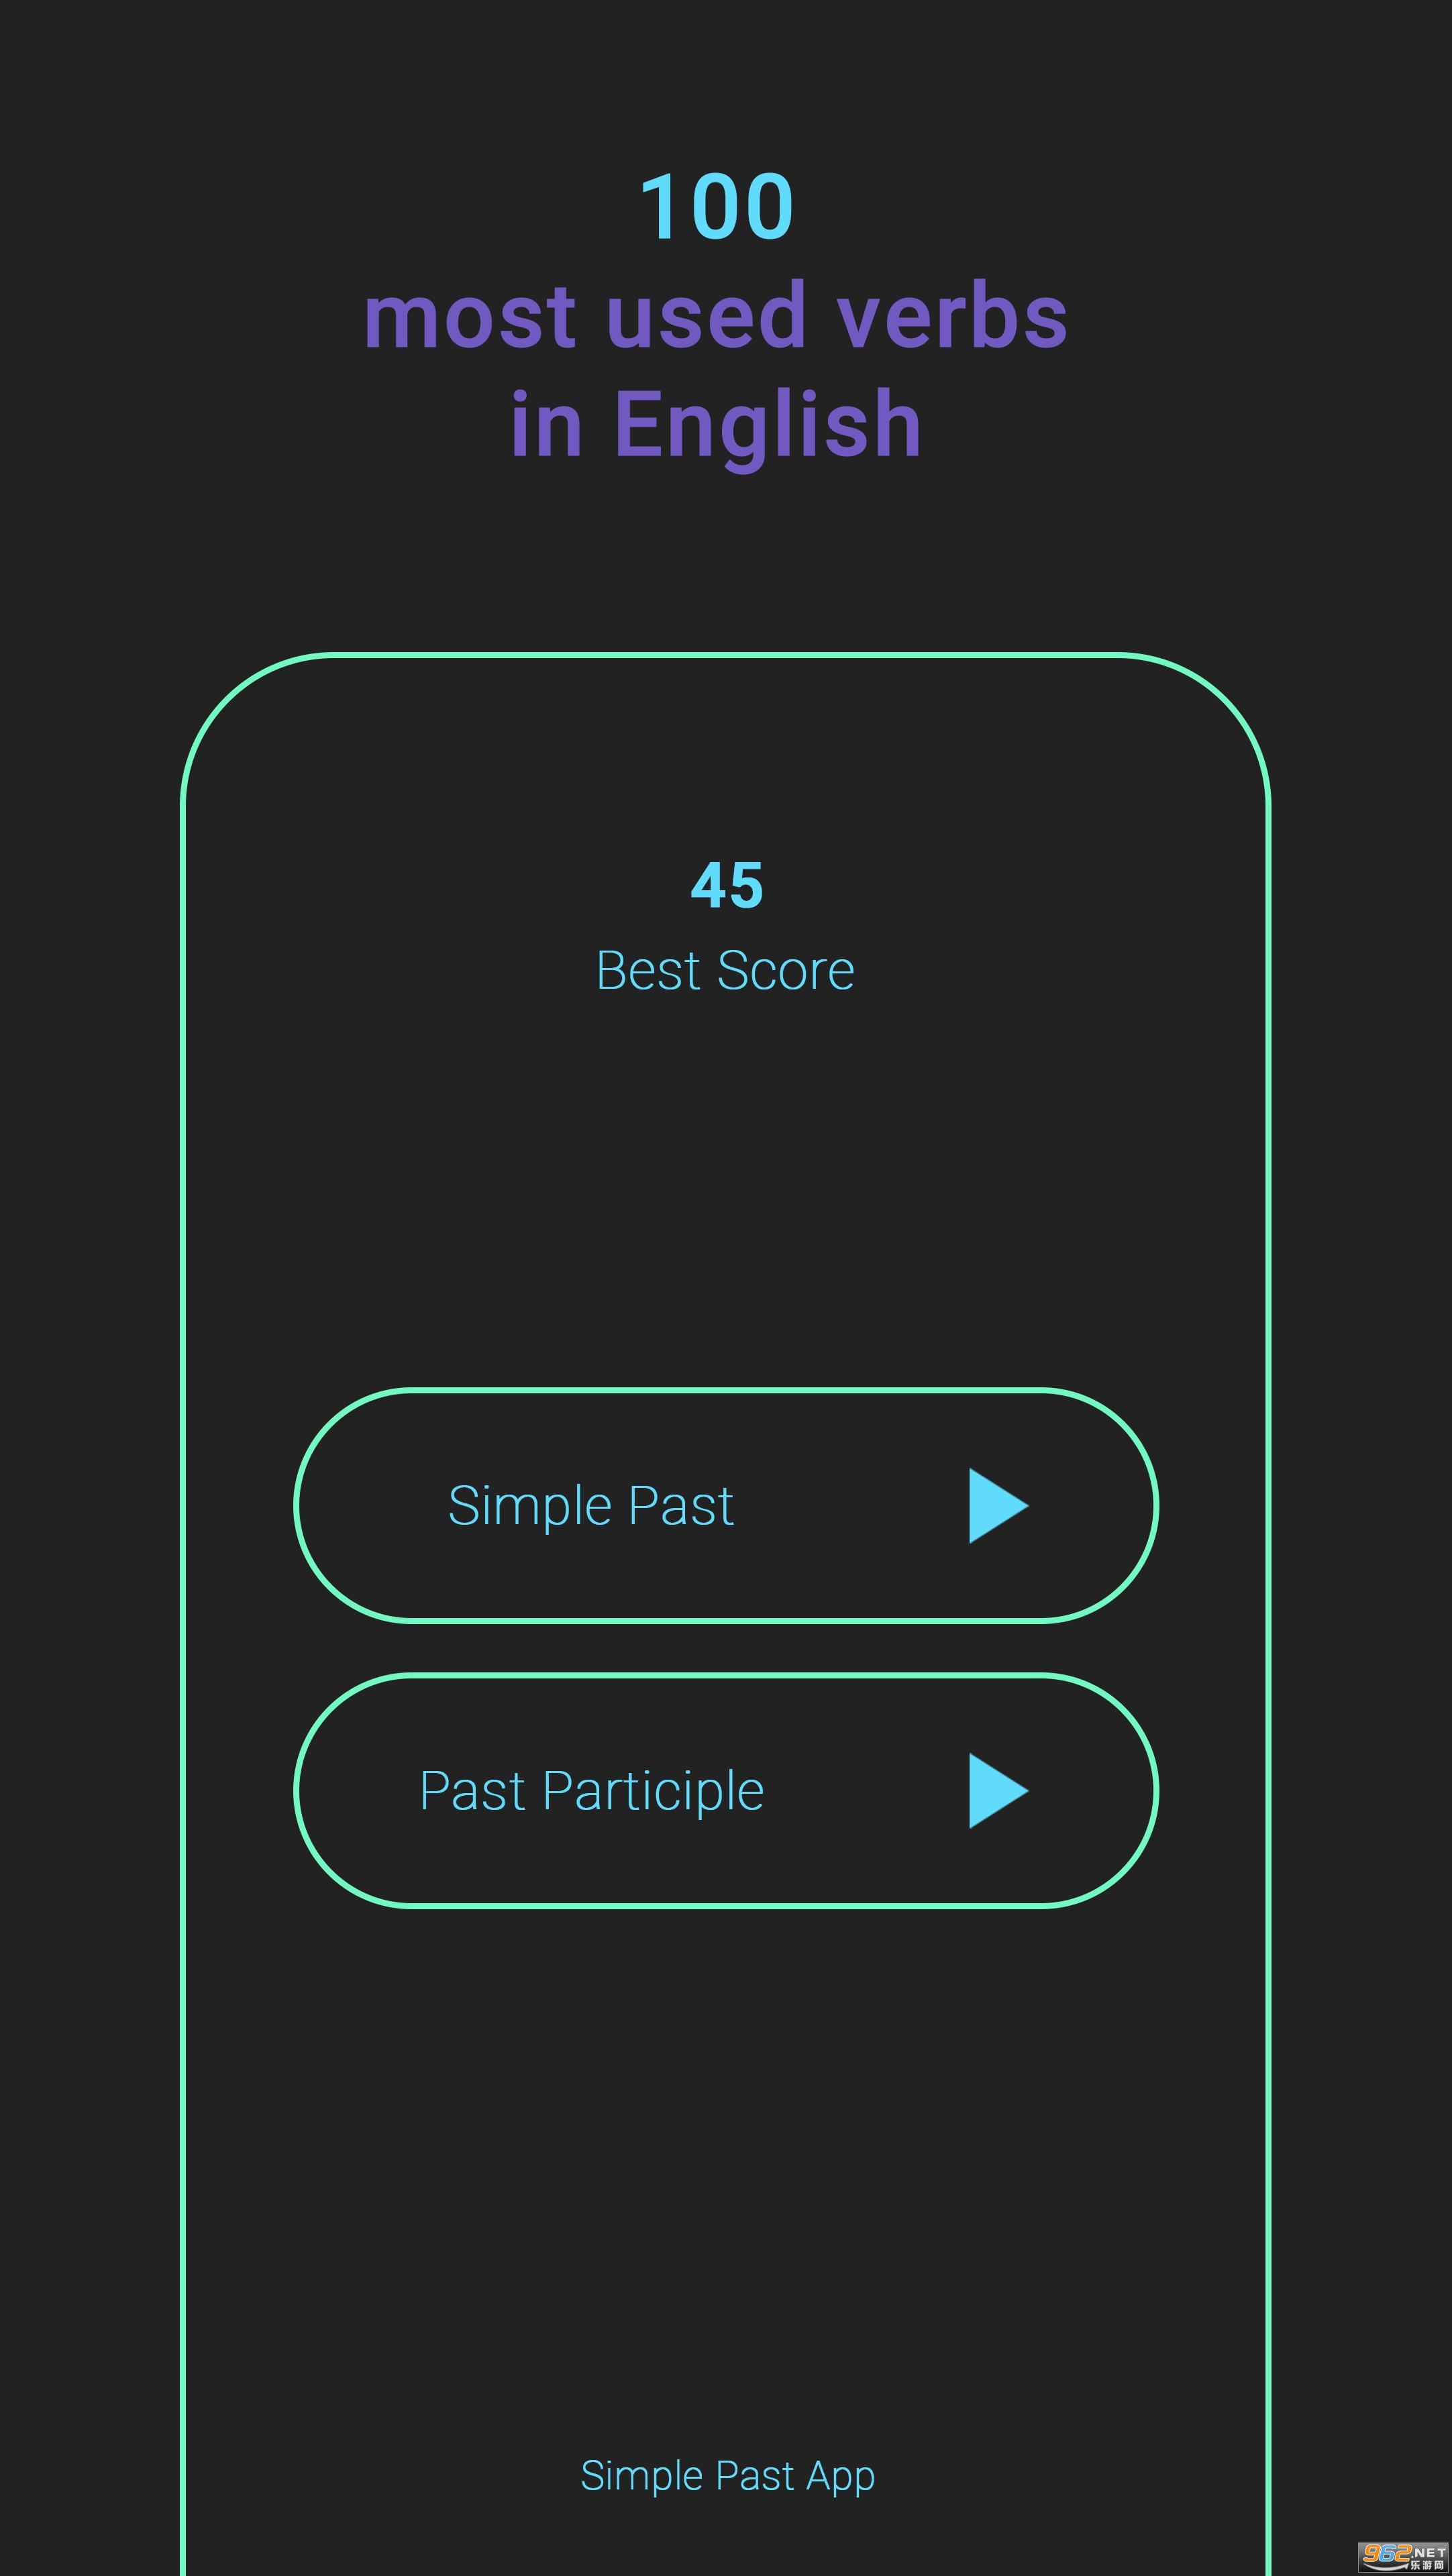 Simple Past App